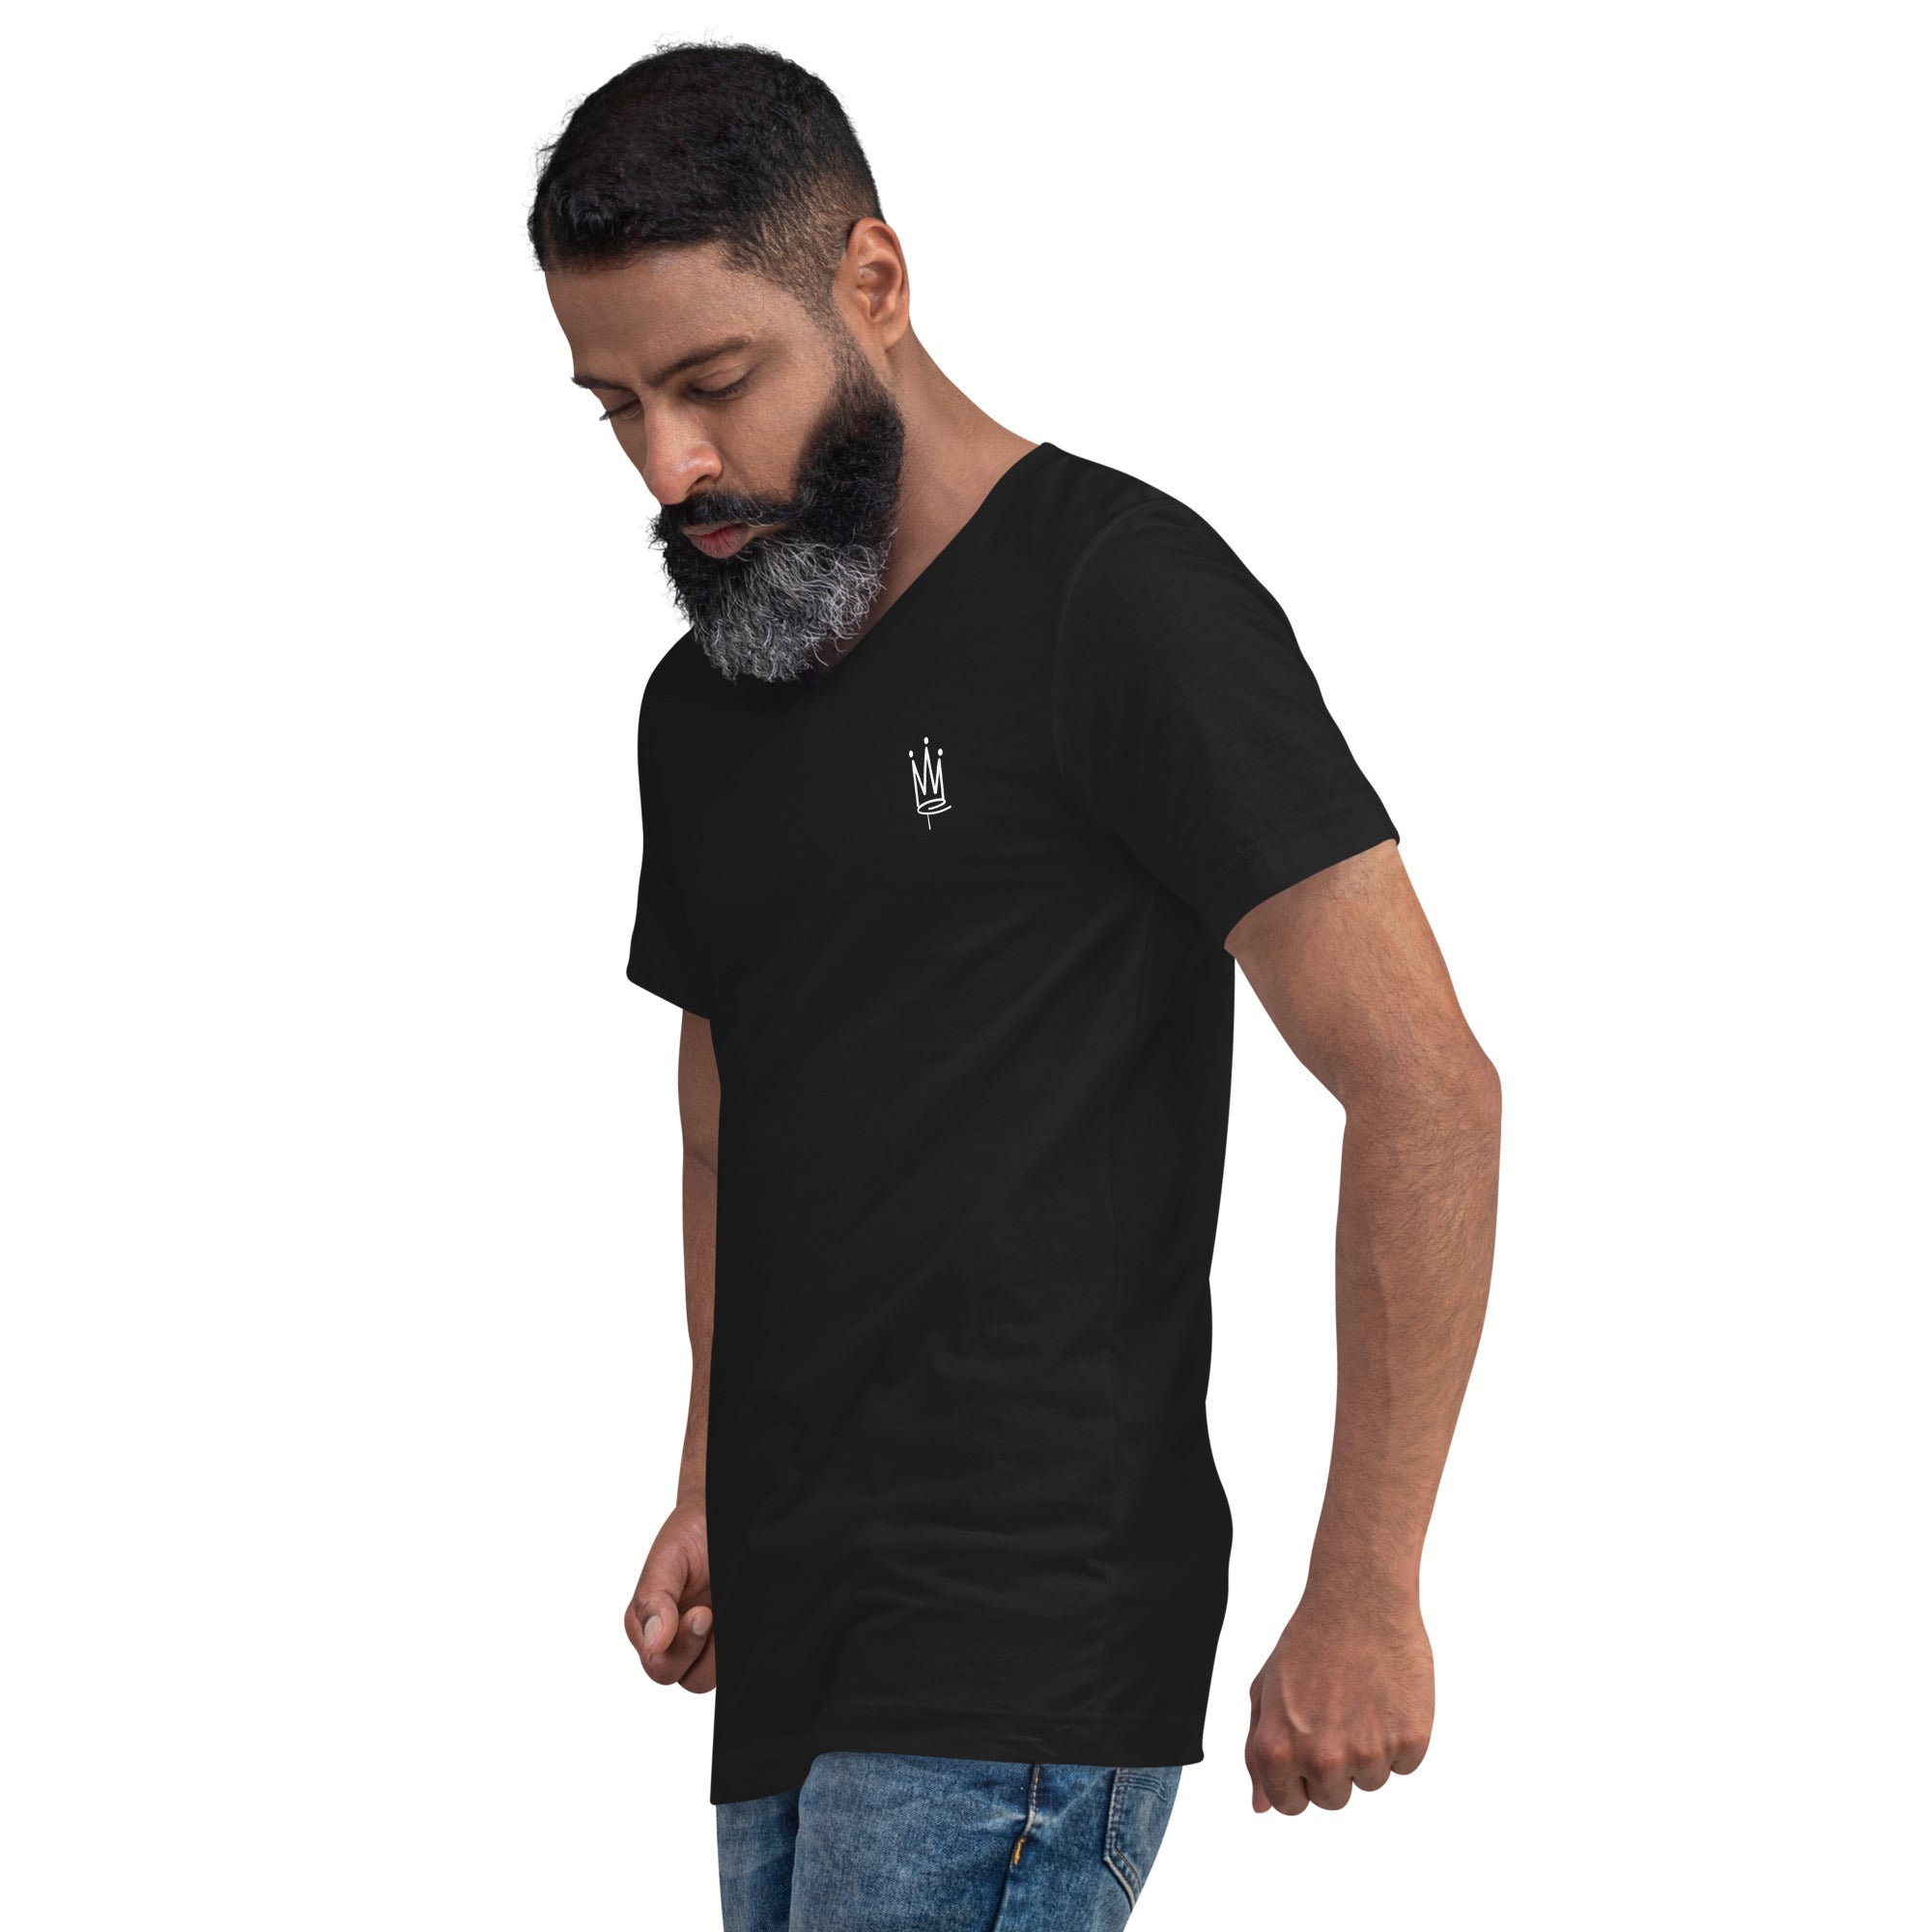 Crowned & Co Unisex Short Sleeve V-Neck T-Shirt